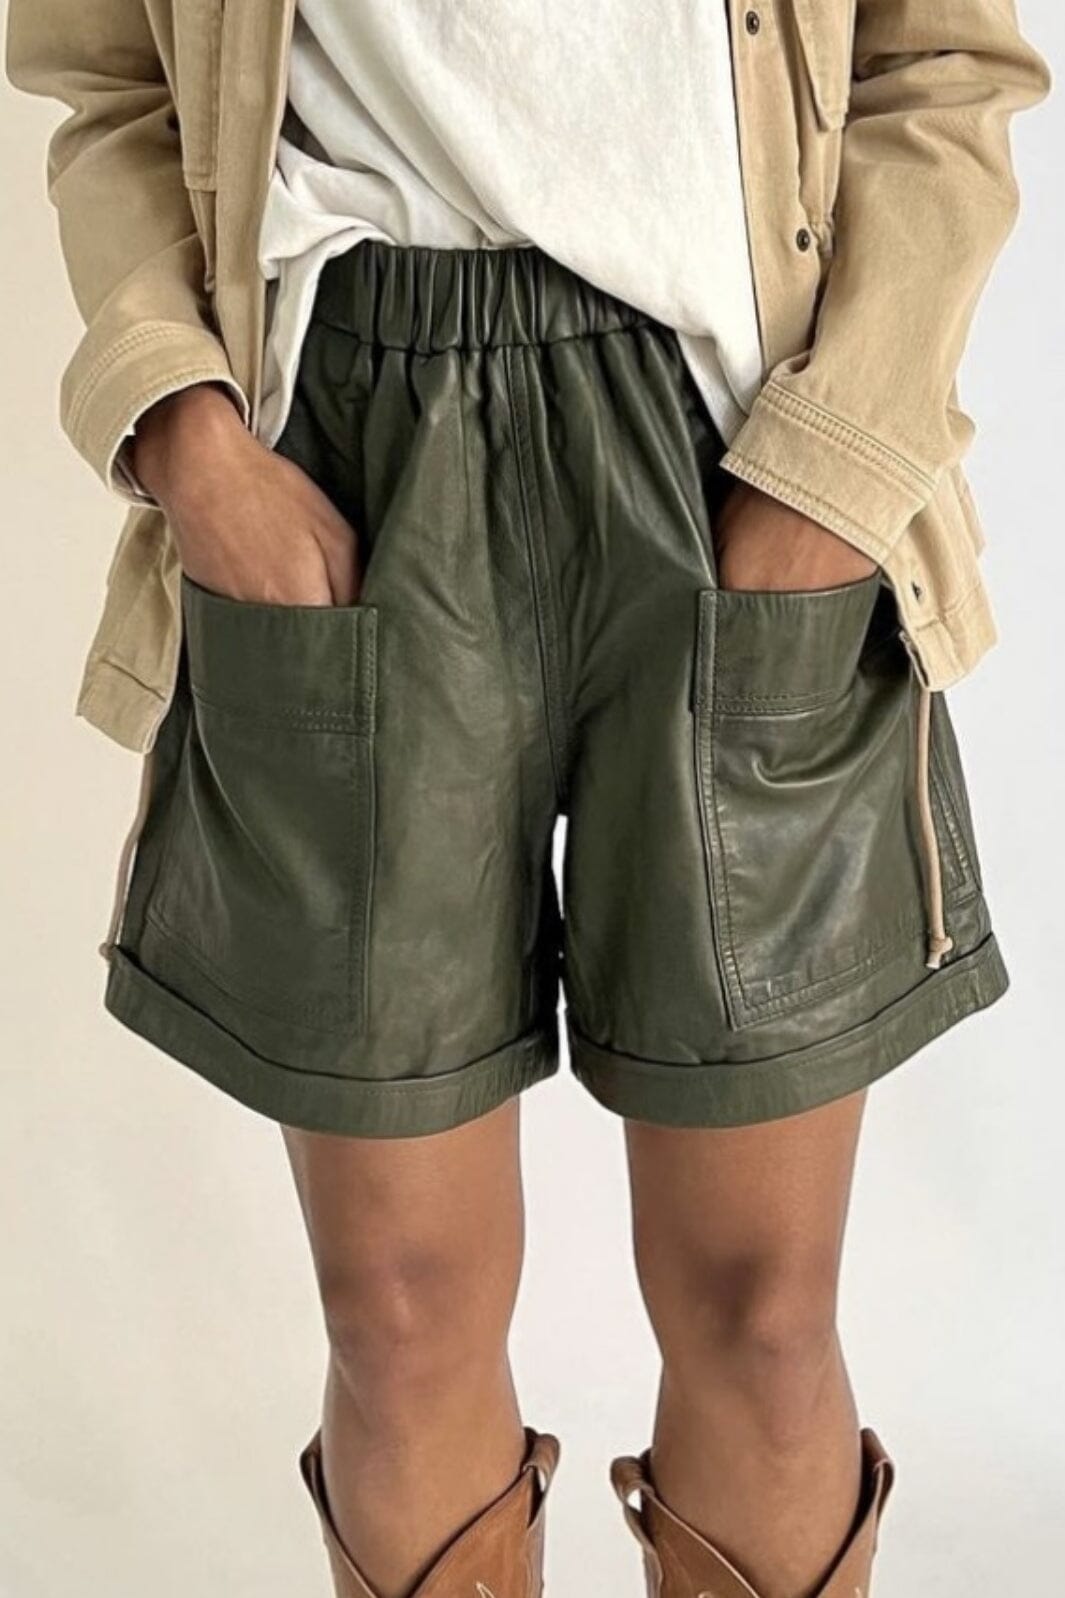 Gossia - ThillaGO Leather Shorts - Dark Army Shorts 